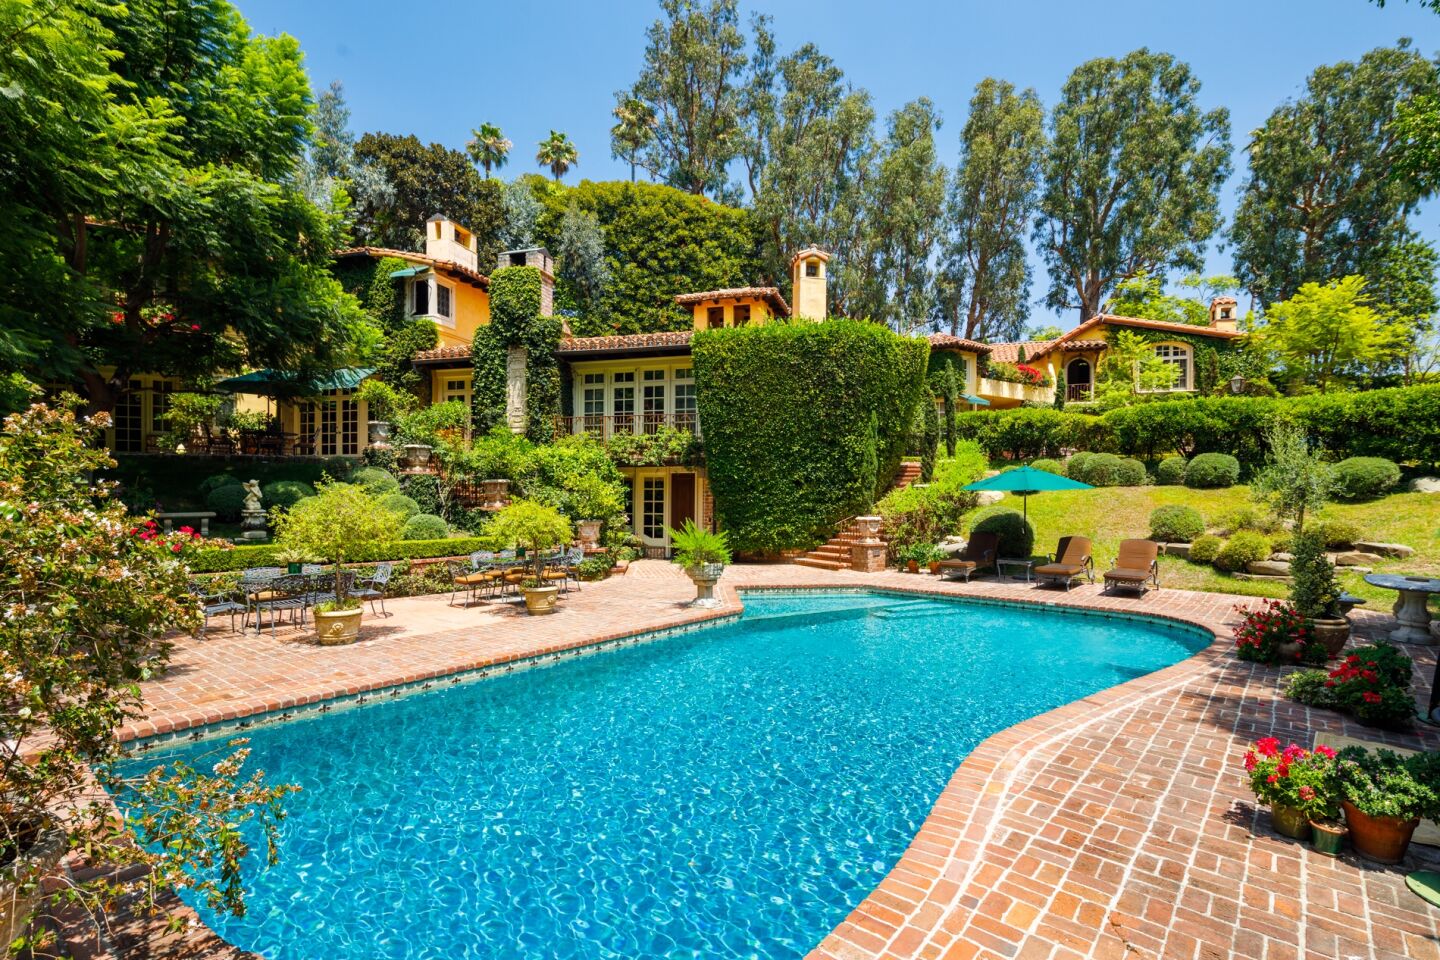 A villa and pool